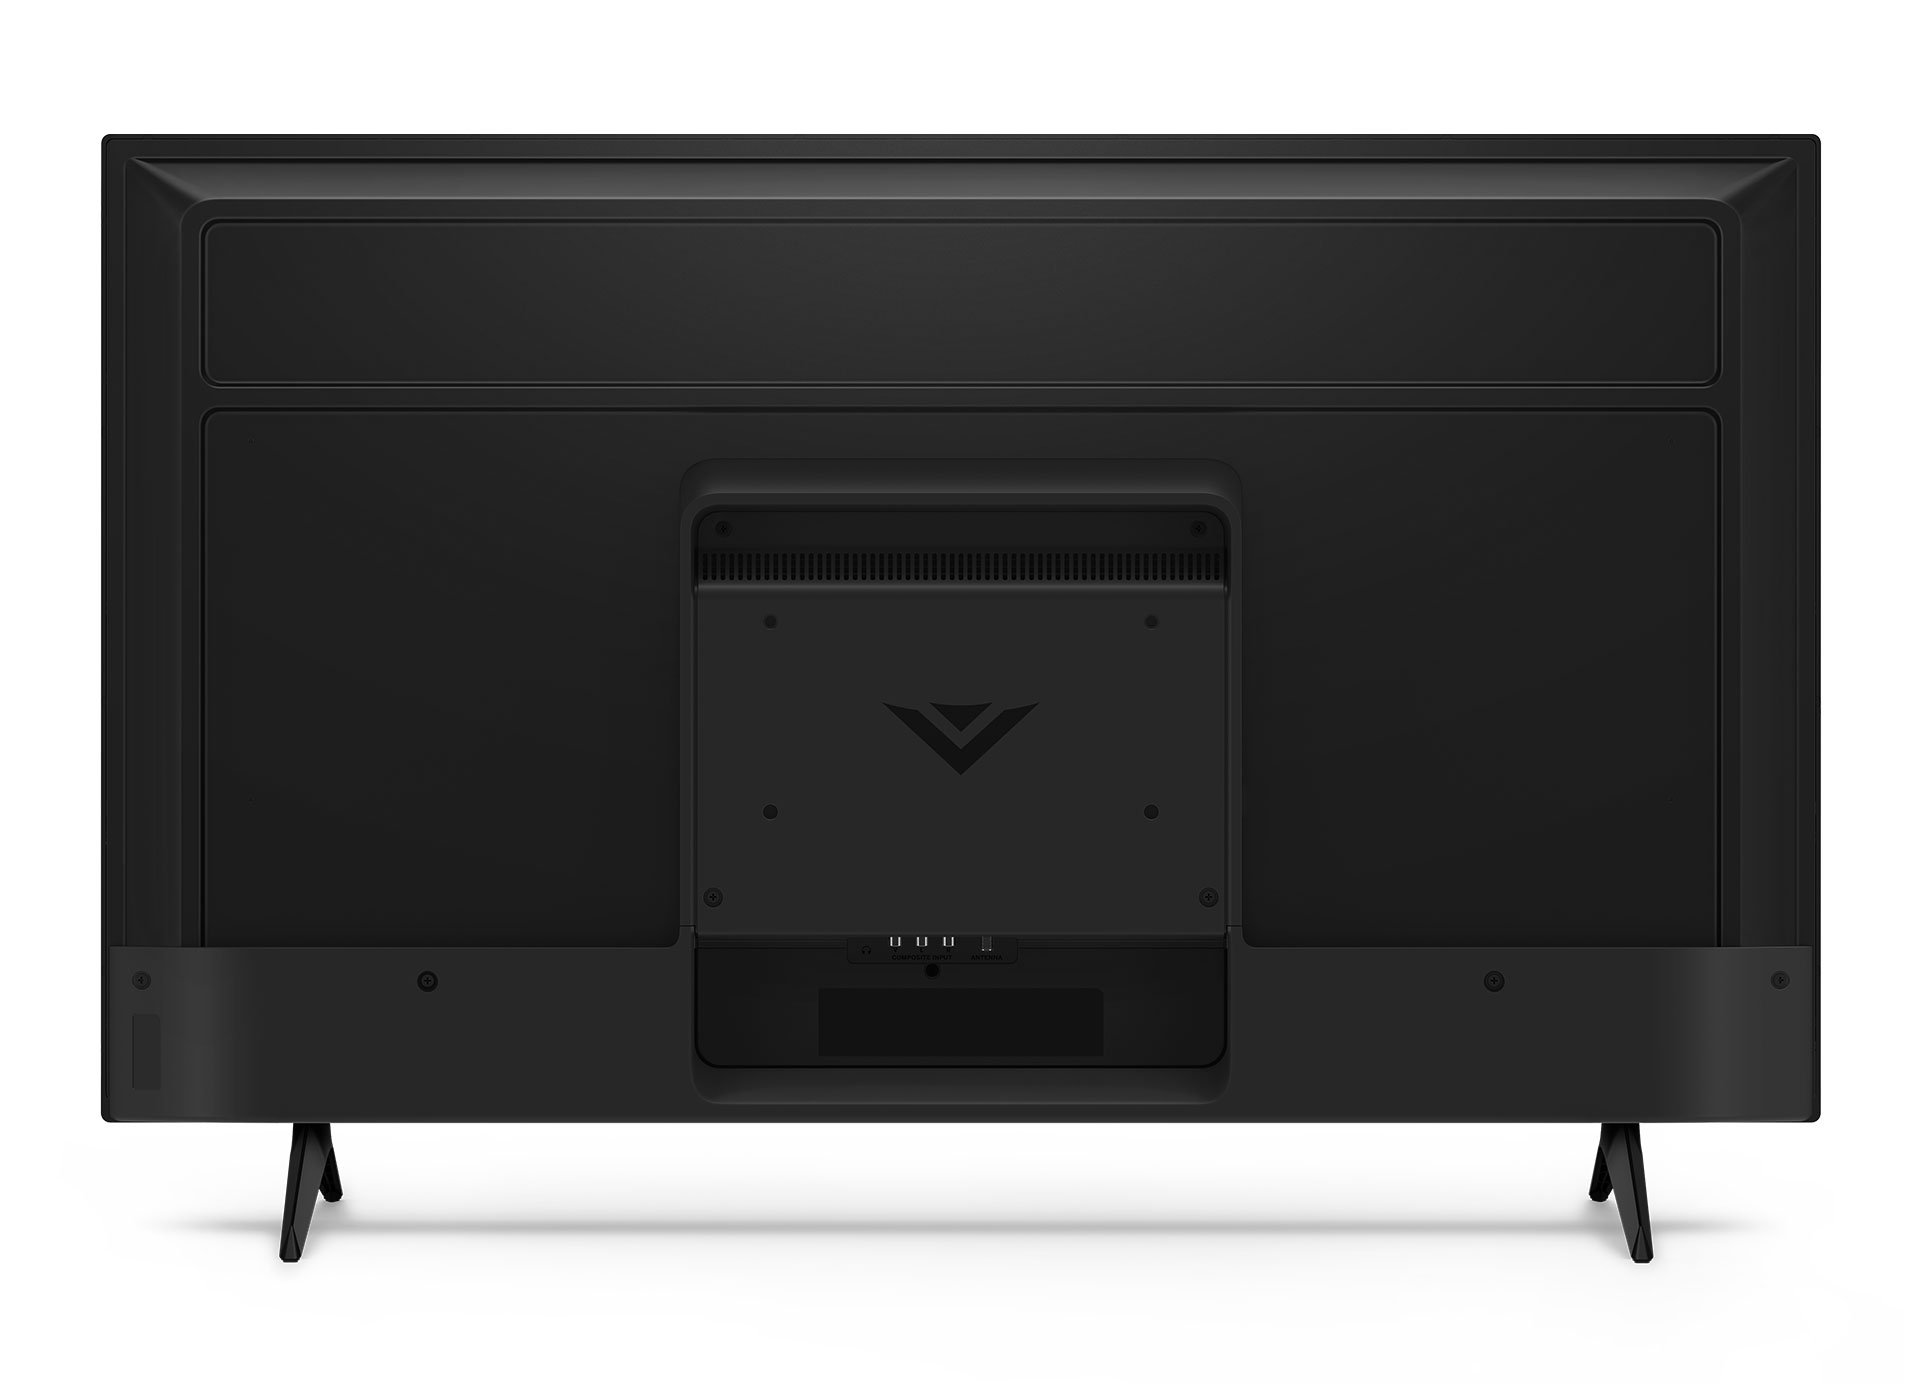 Vizio 40-inch Class FHD LED Smart TV D-Series D40f-J Renewed 39.5-inch Diagonal